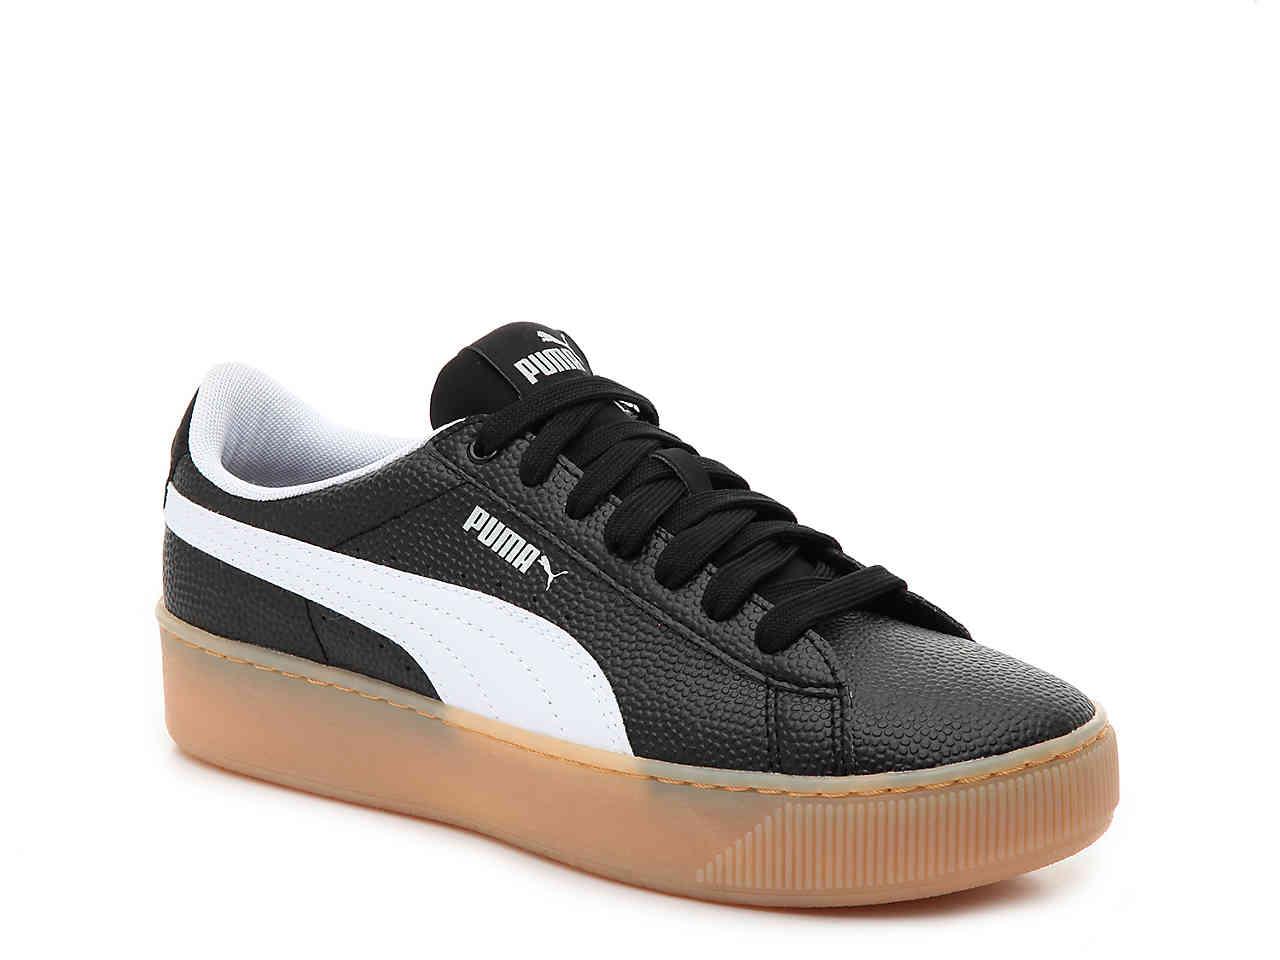 Lyst - Puma Vikky Platform Sneaker in Black - Save 15.714285714285708%